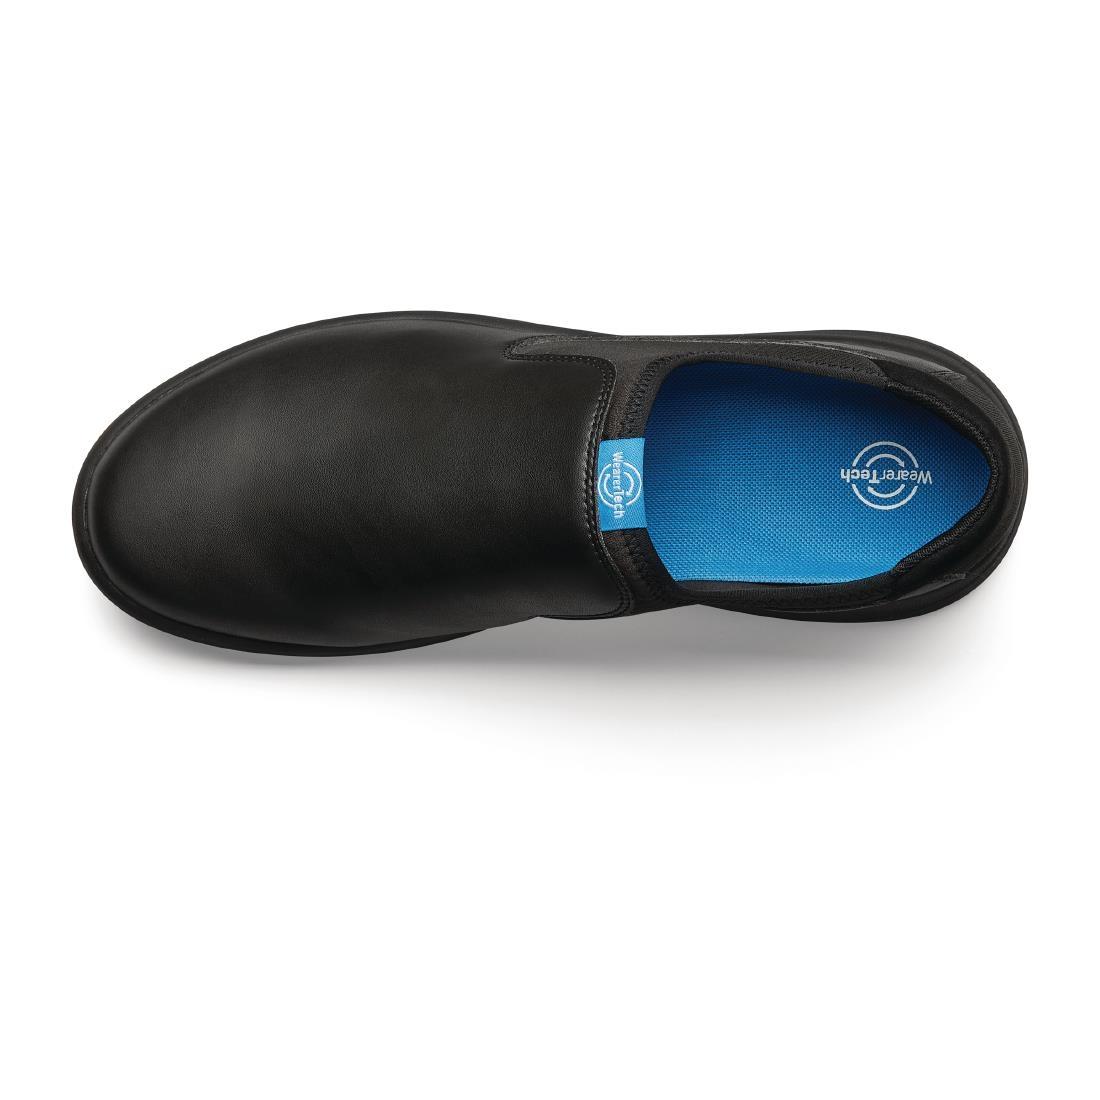 WearerTech Vitalise Slip on Shoe Black/Black with Modular Insole Size 46